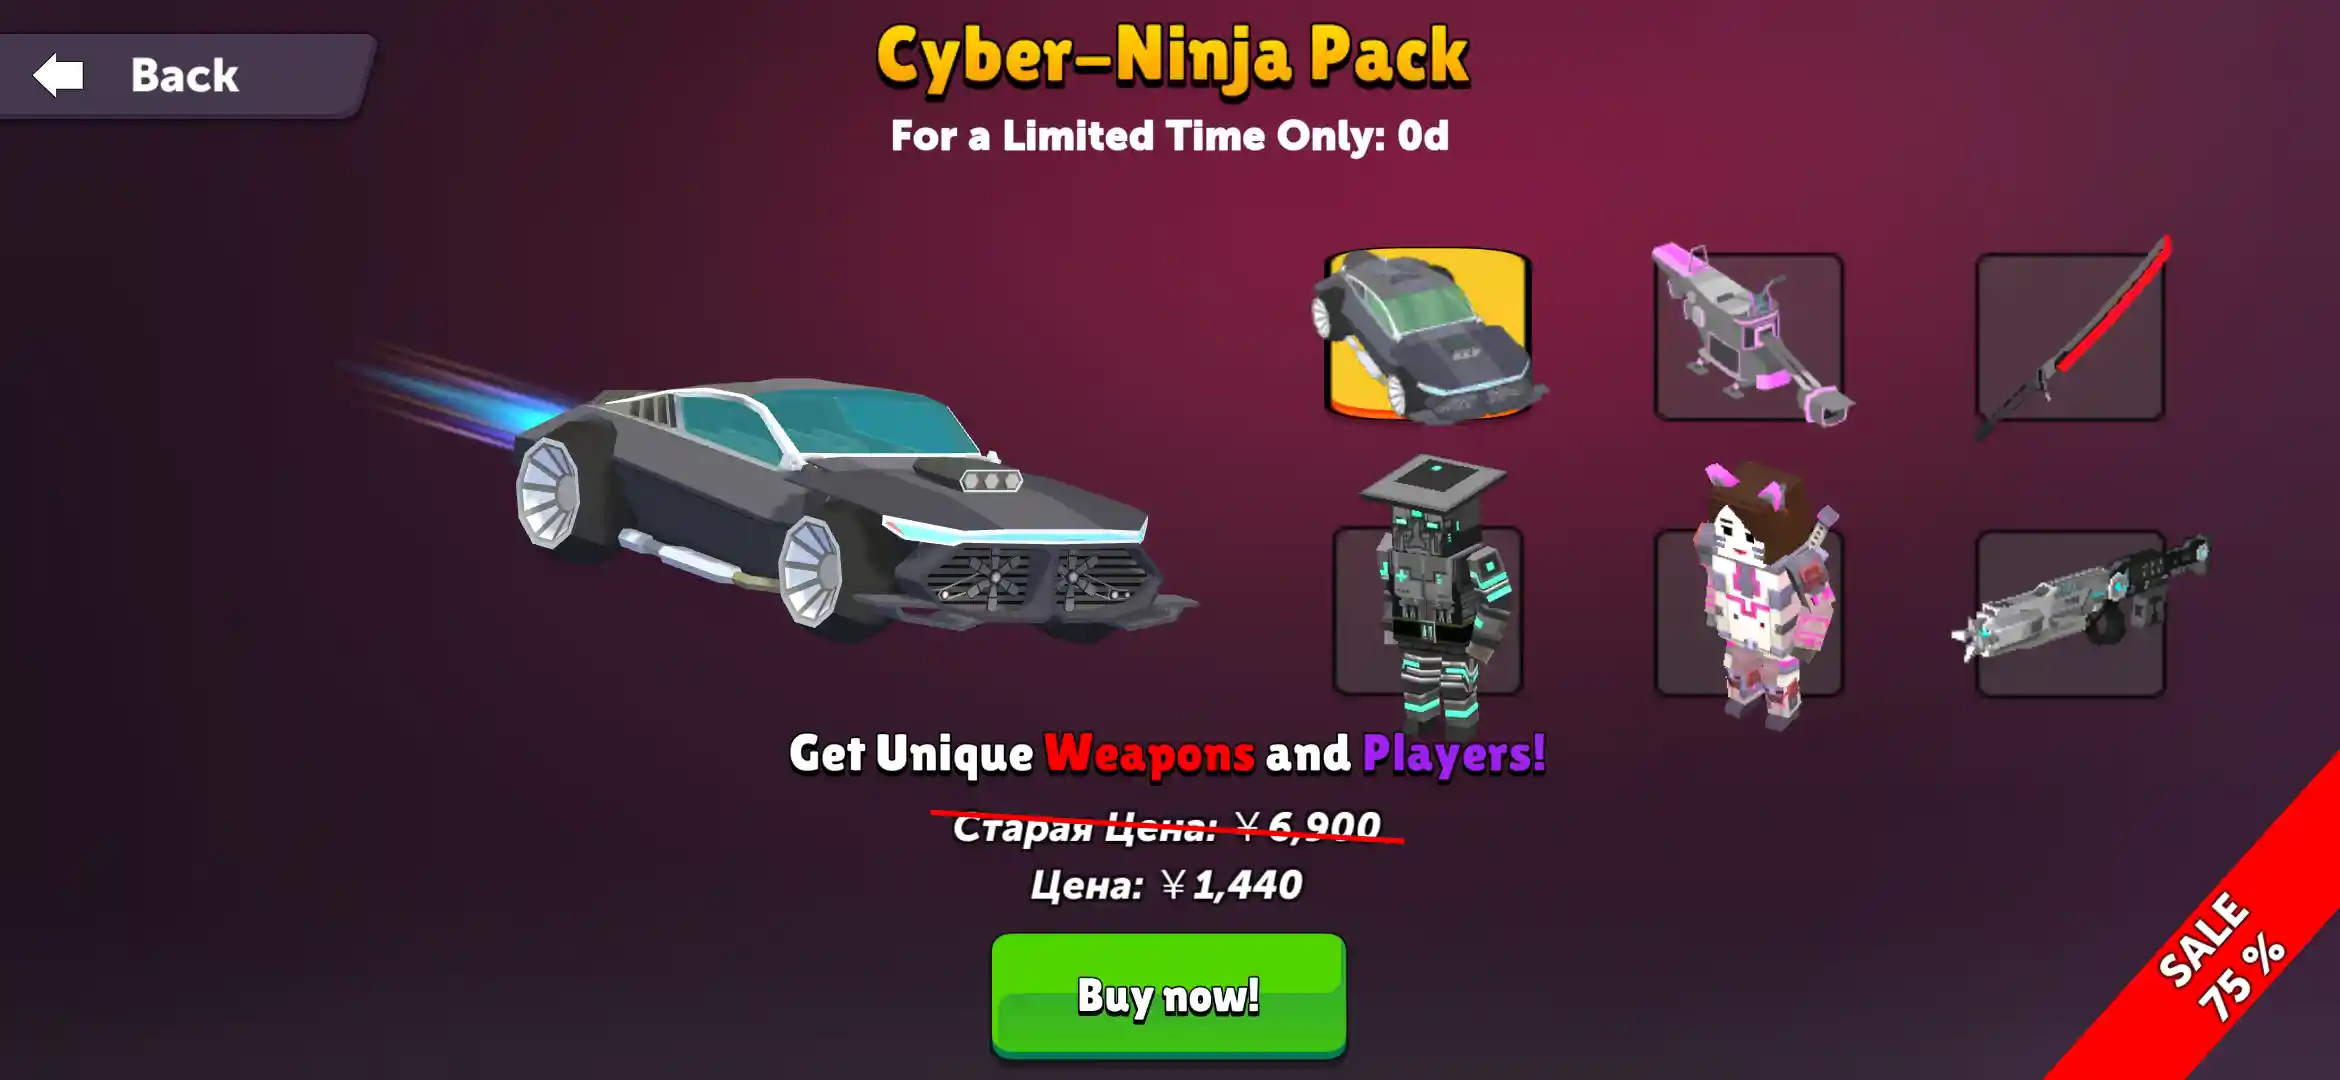 Cyber-Ninja Pack.jpg